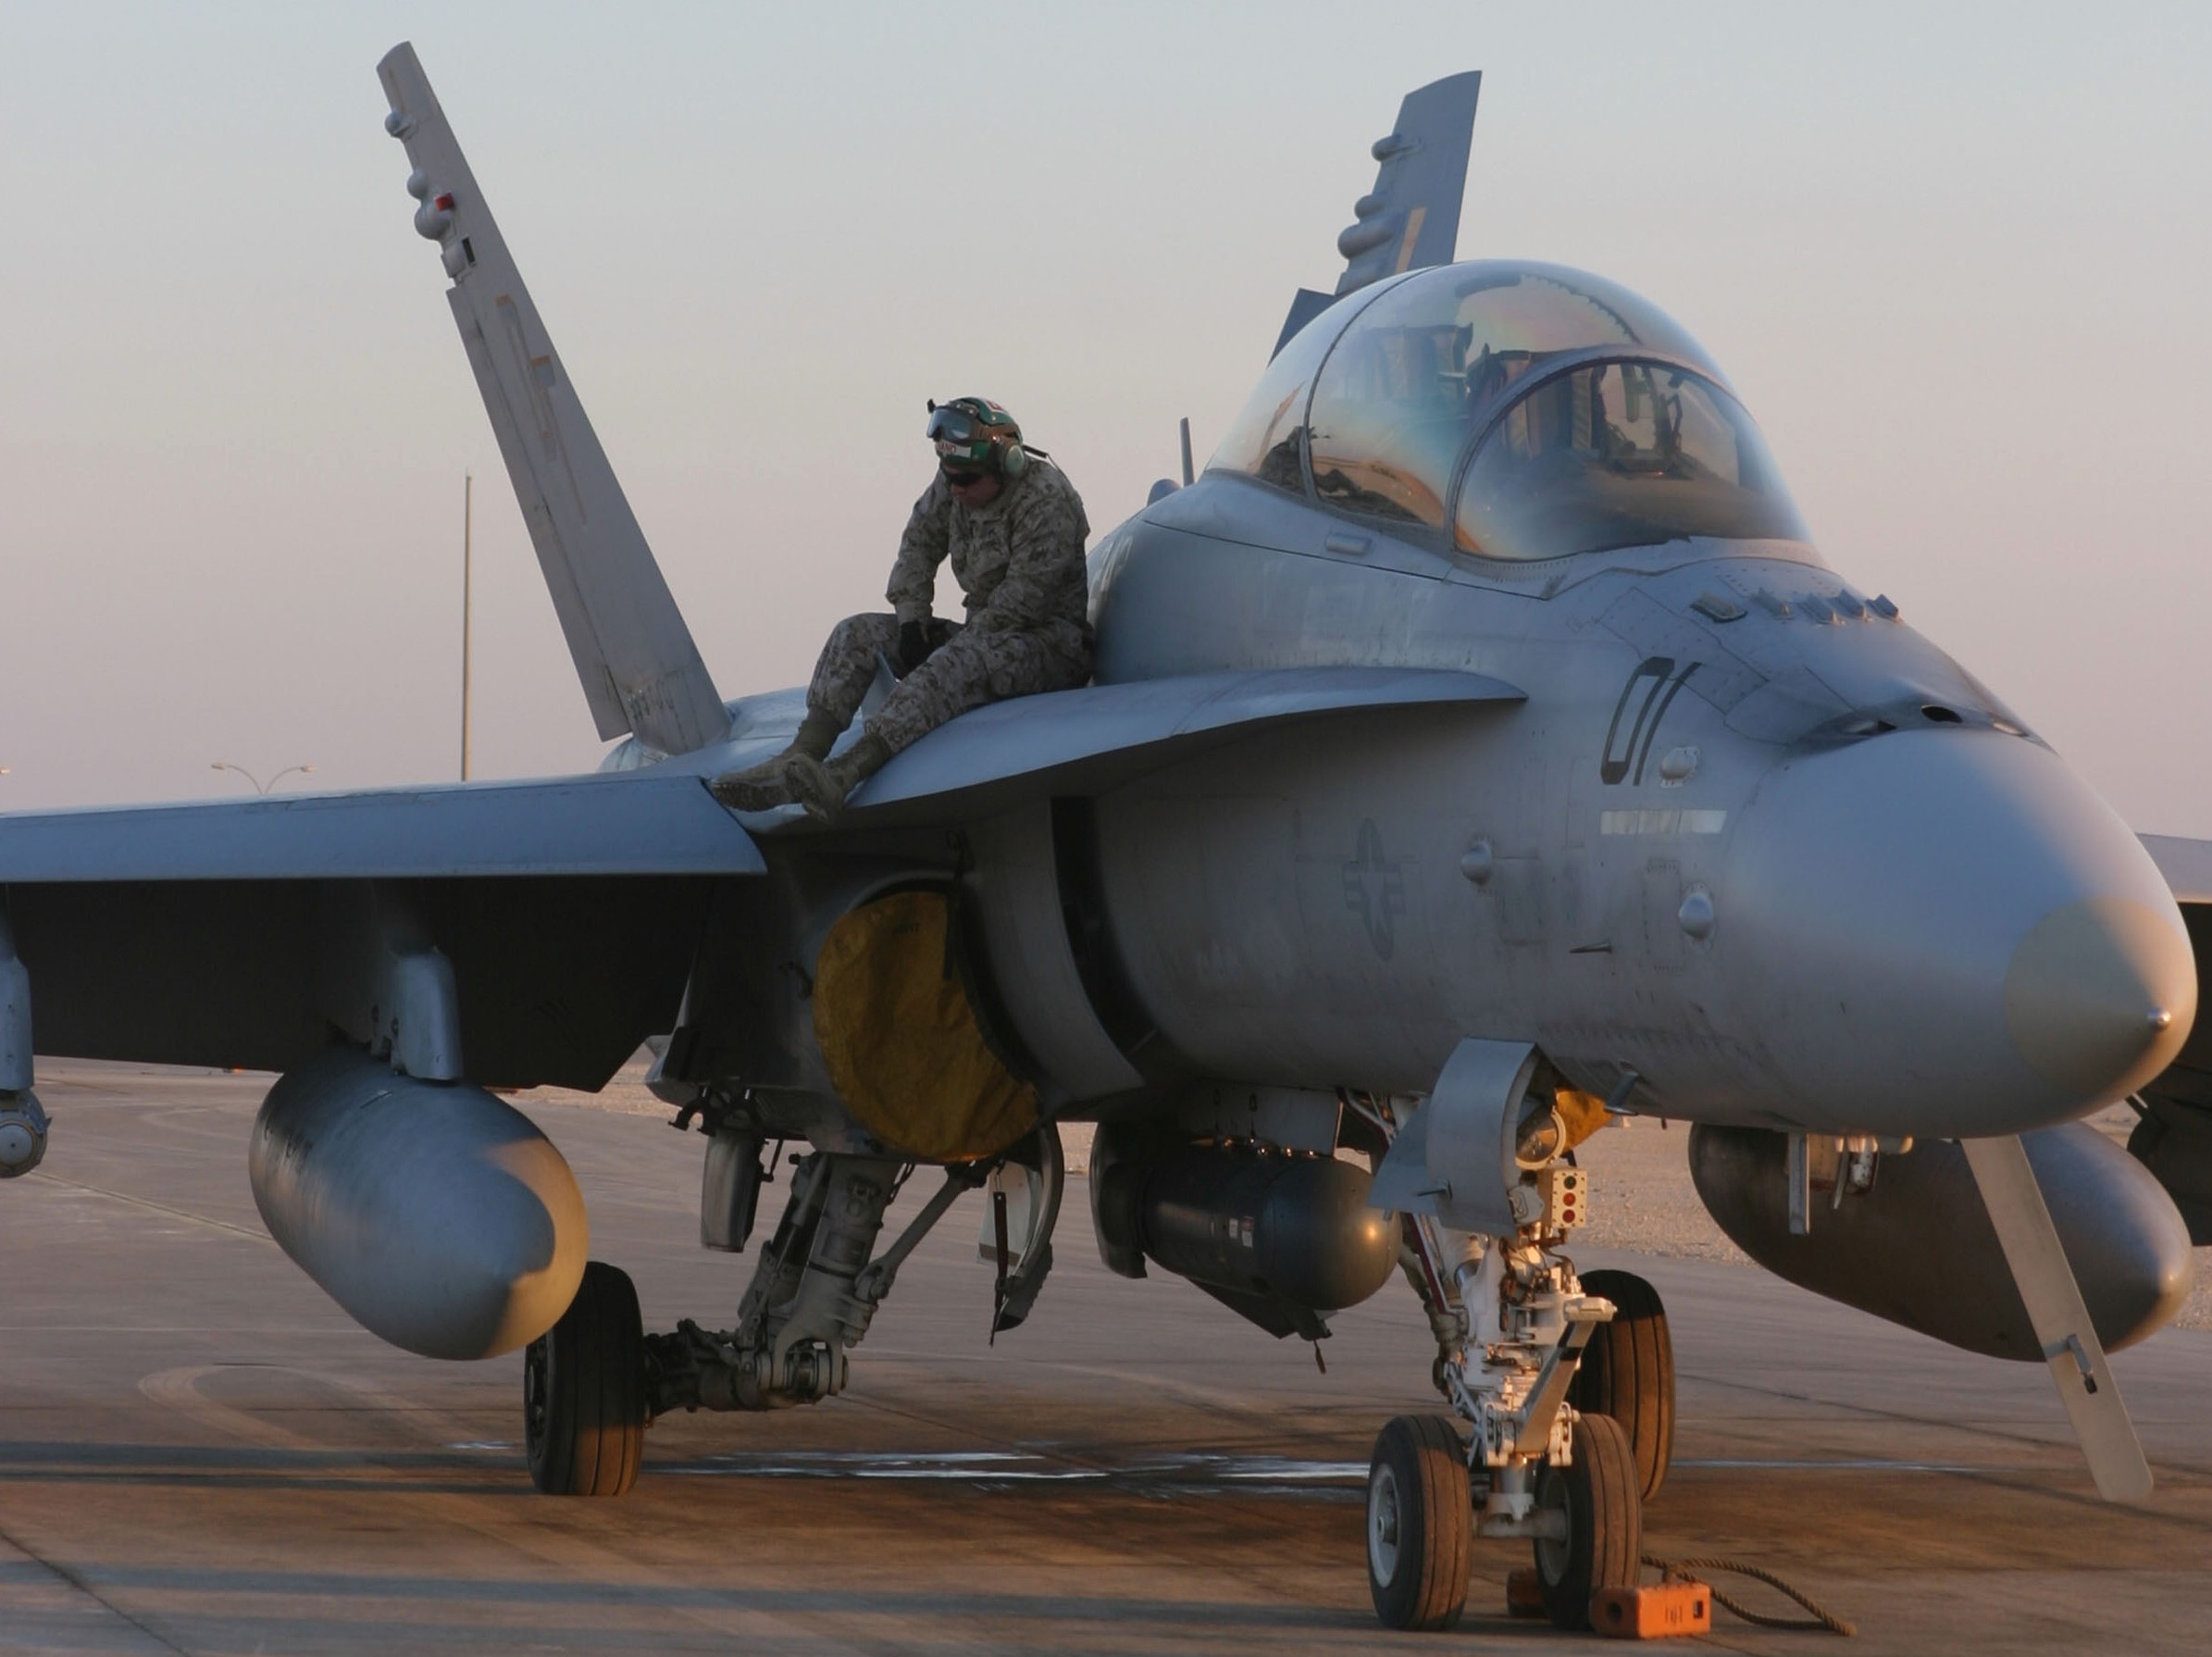 vmfa(aw)-242 bats marine all-weather fighter attack squadron usmc f/a-18d hornet 27 al asad iraq